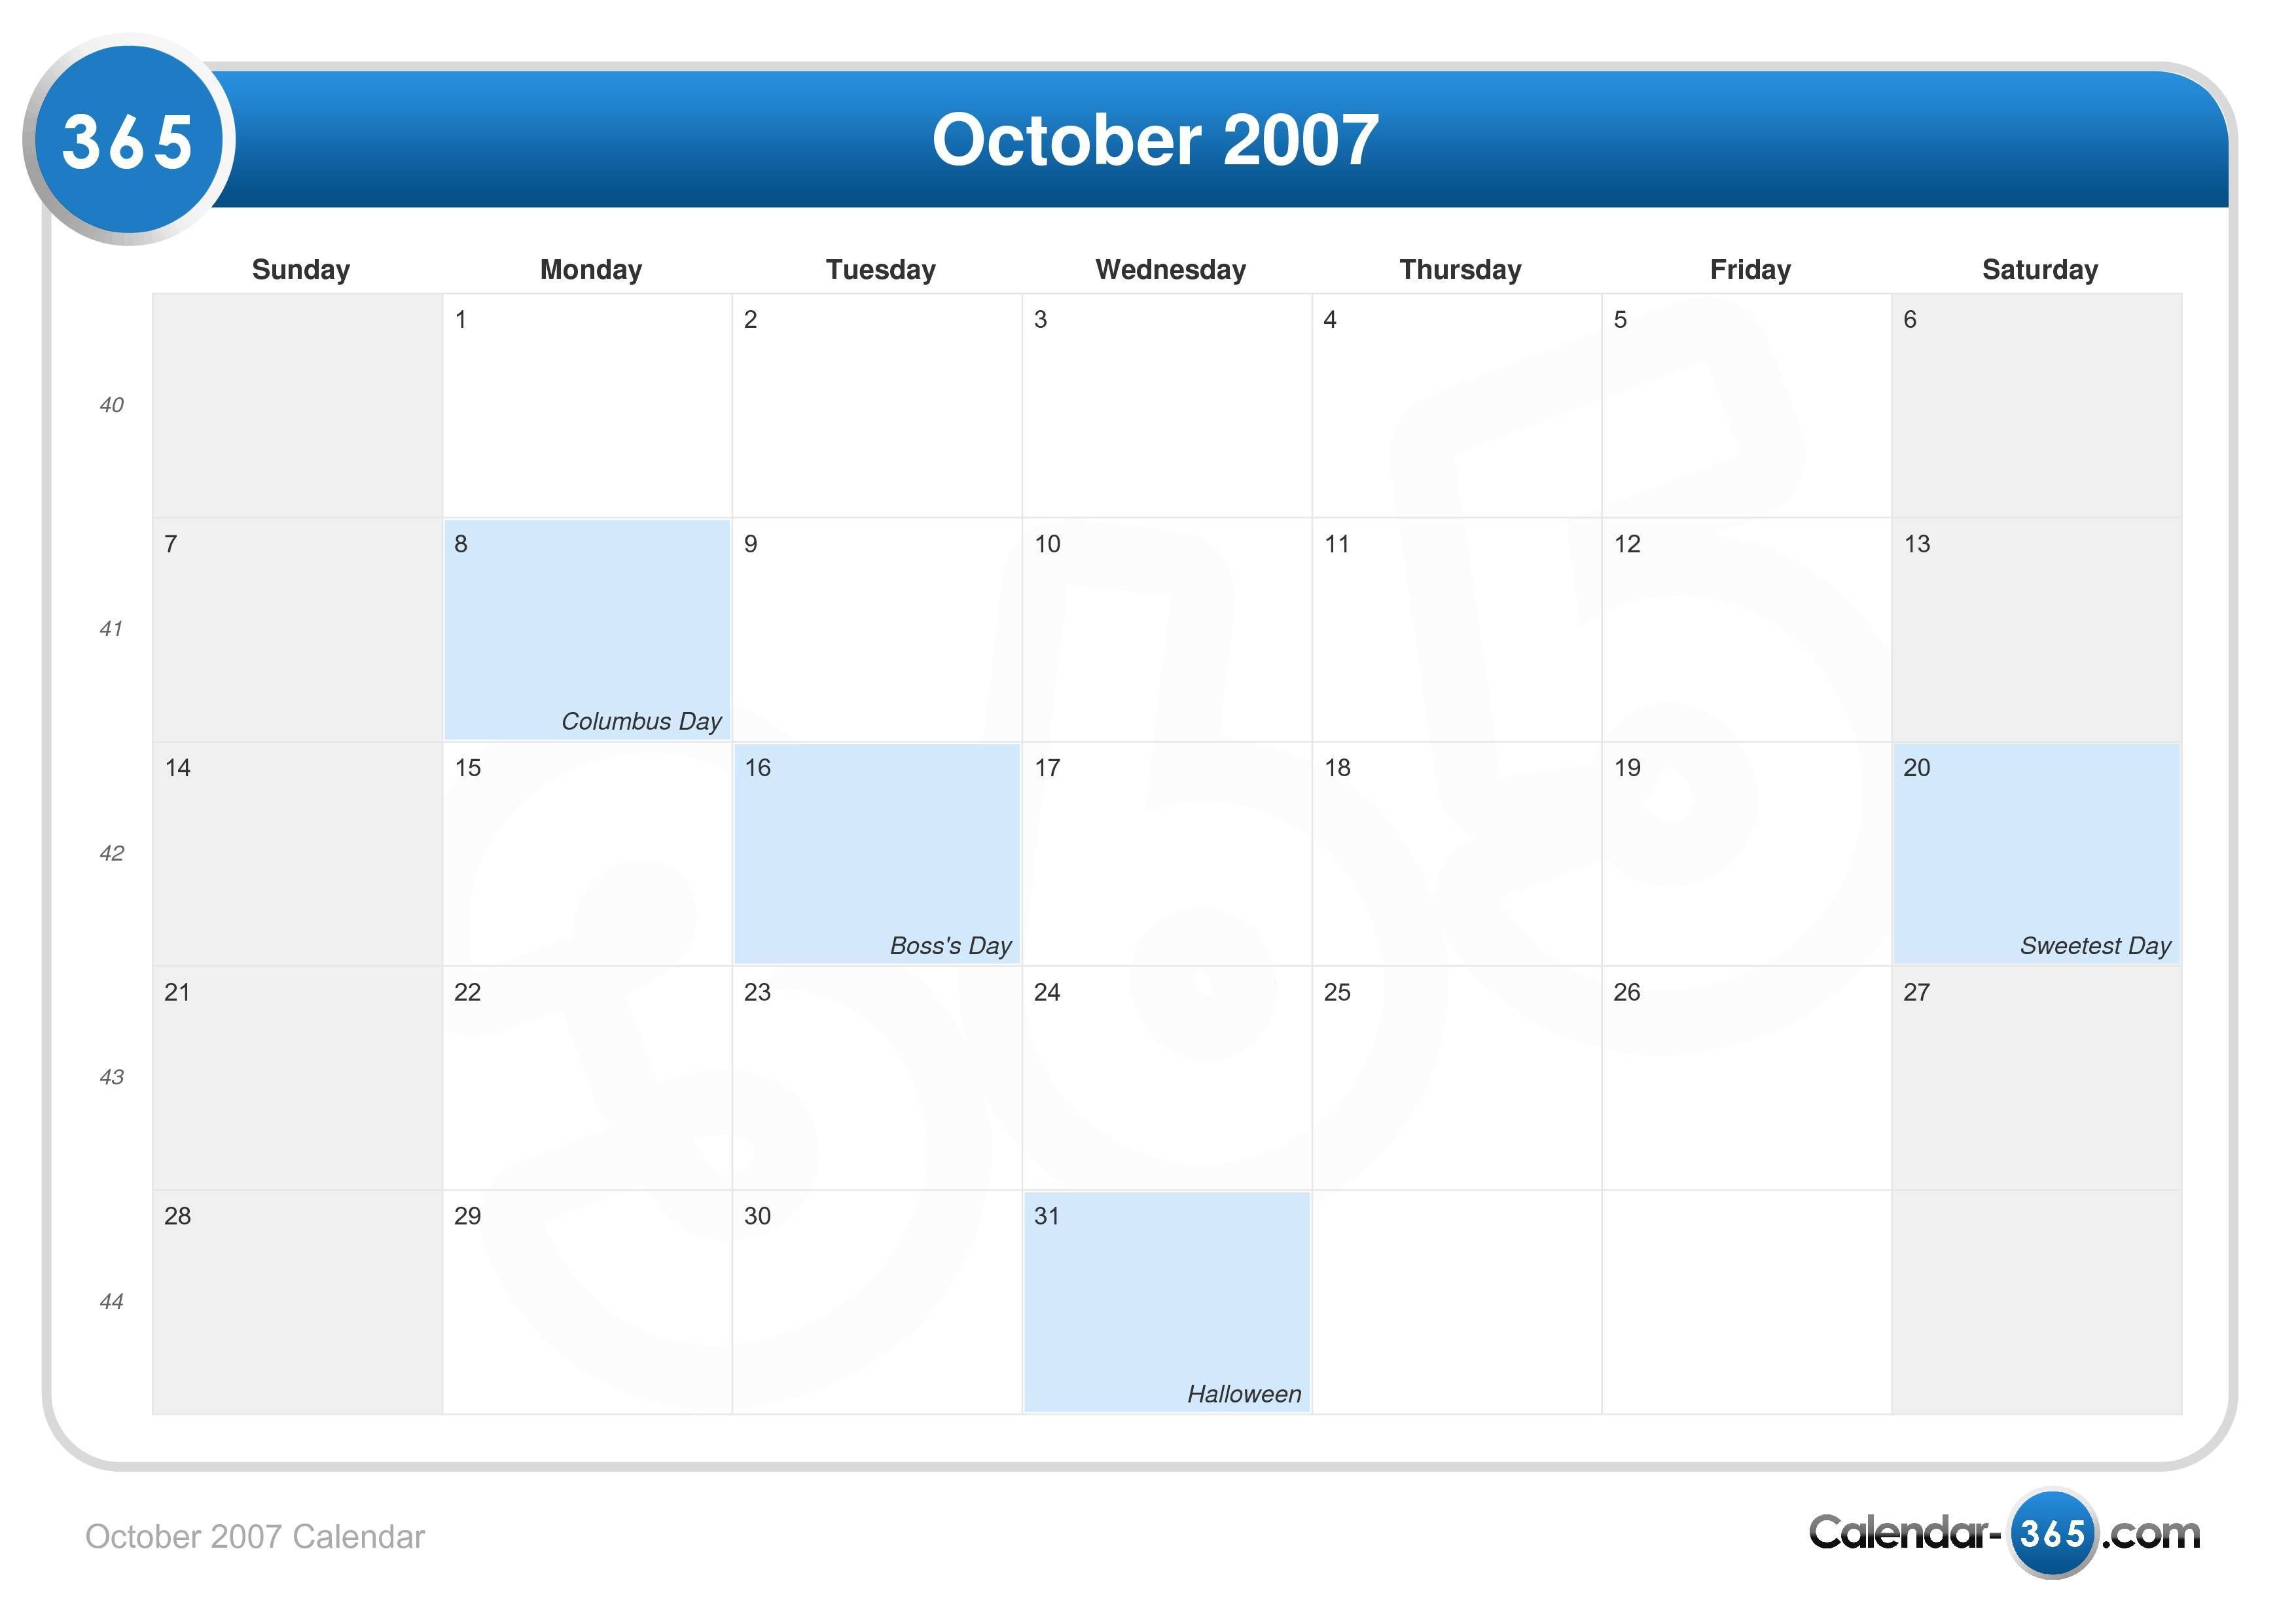 October 2007 Calendar